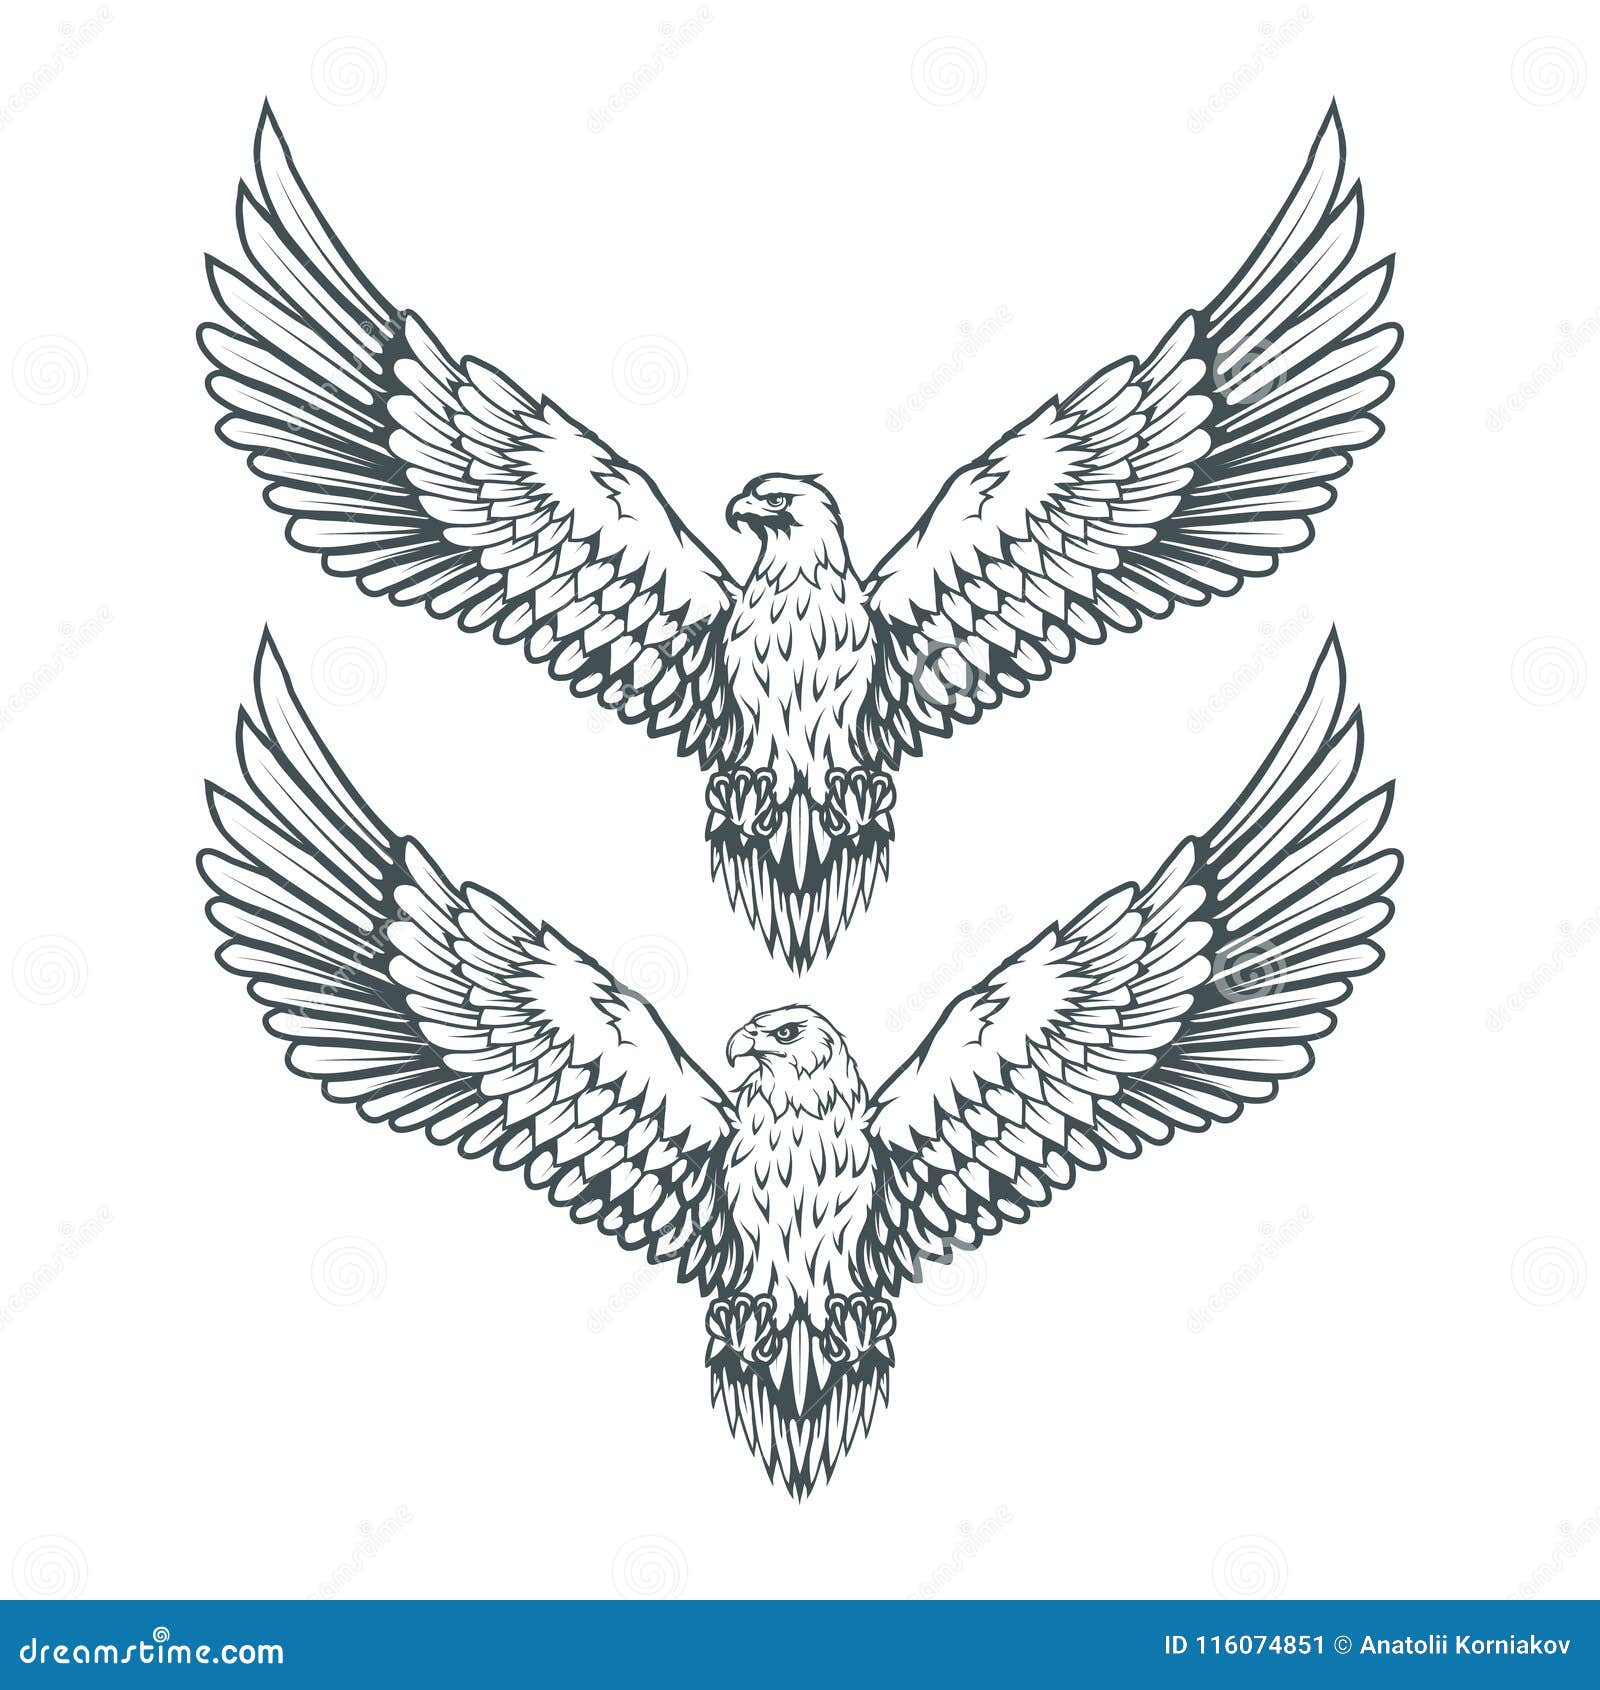 One single line drawing of strong eagle bird  Stock Illustration  99301138  PIXTA